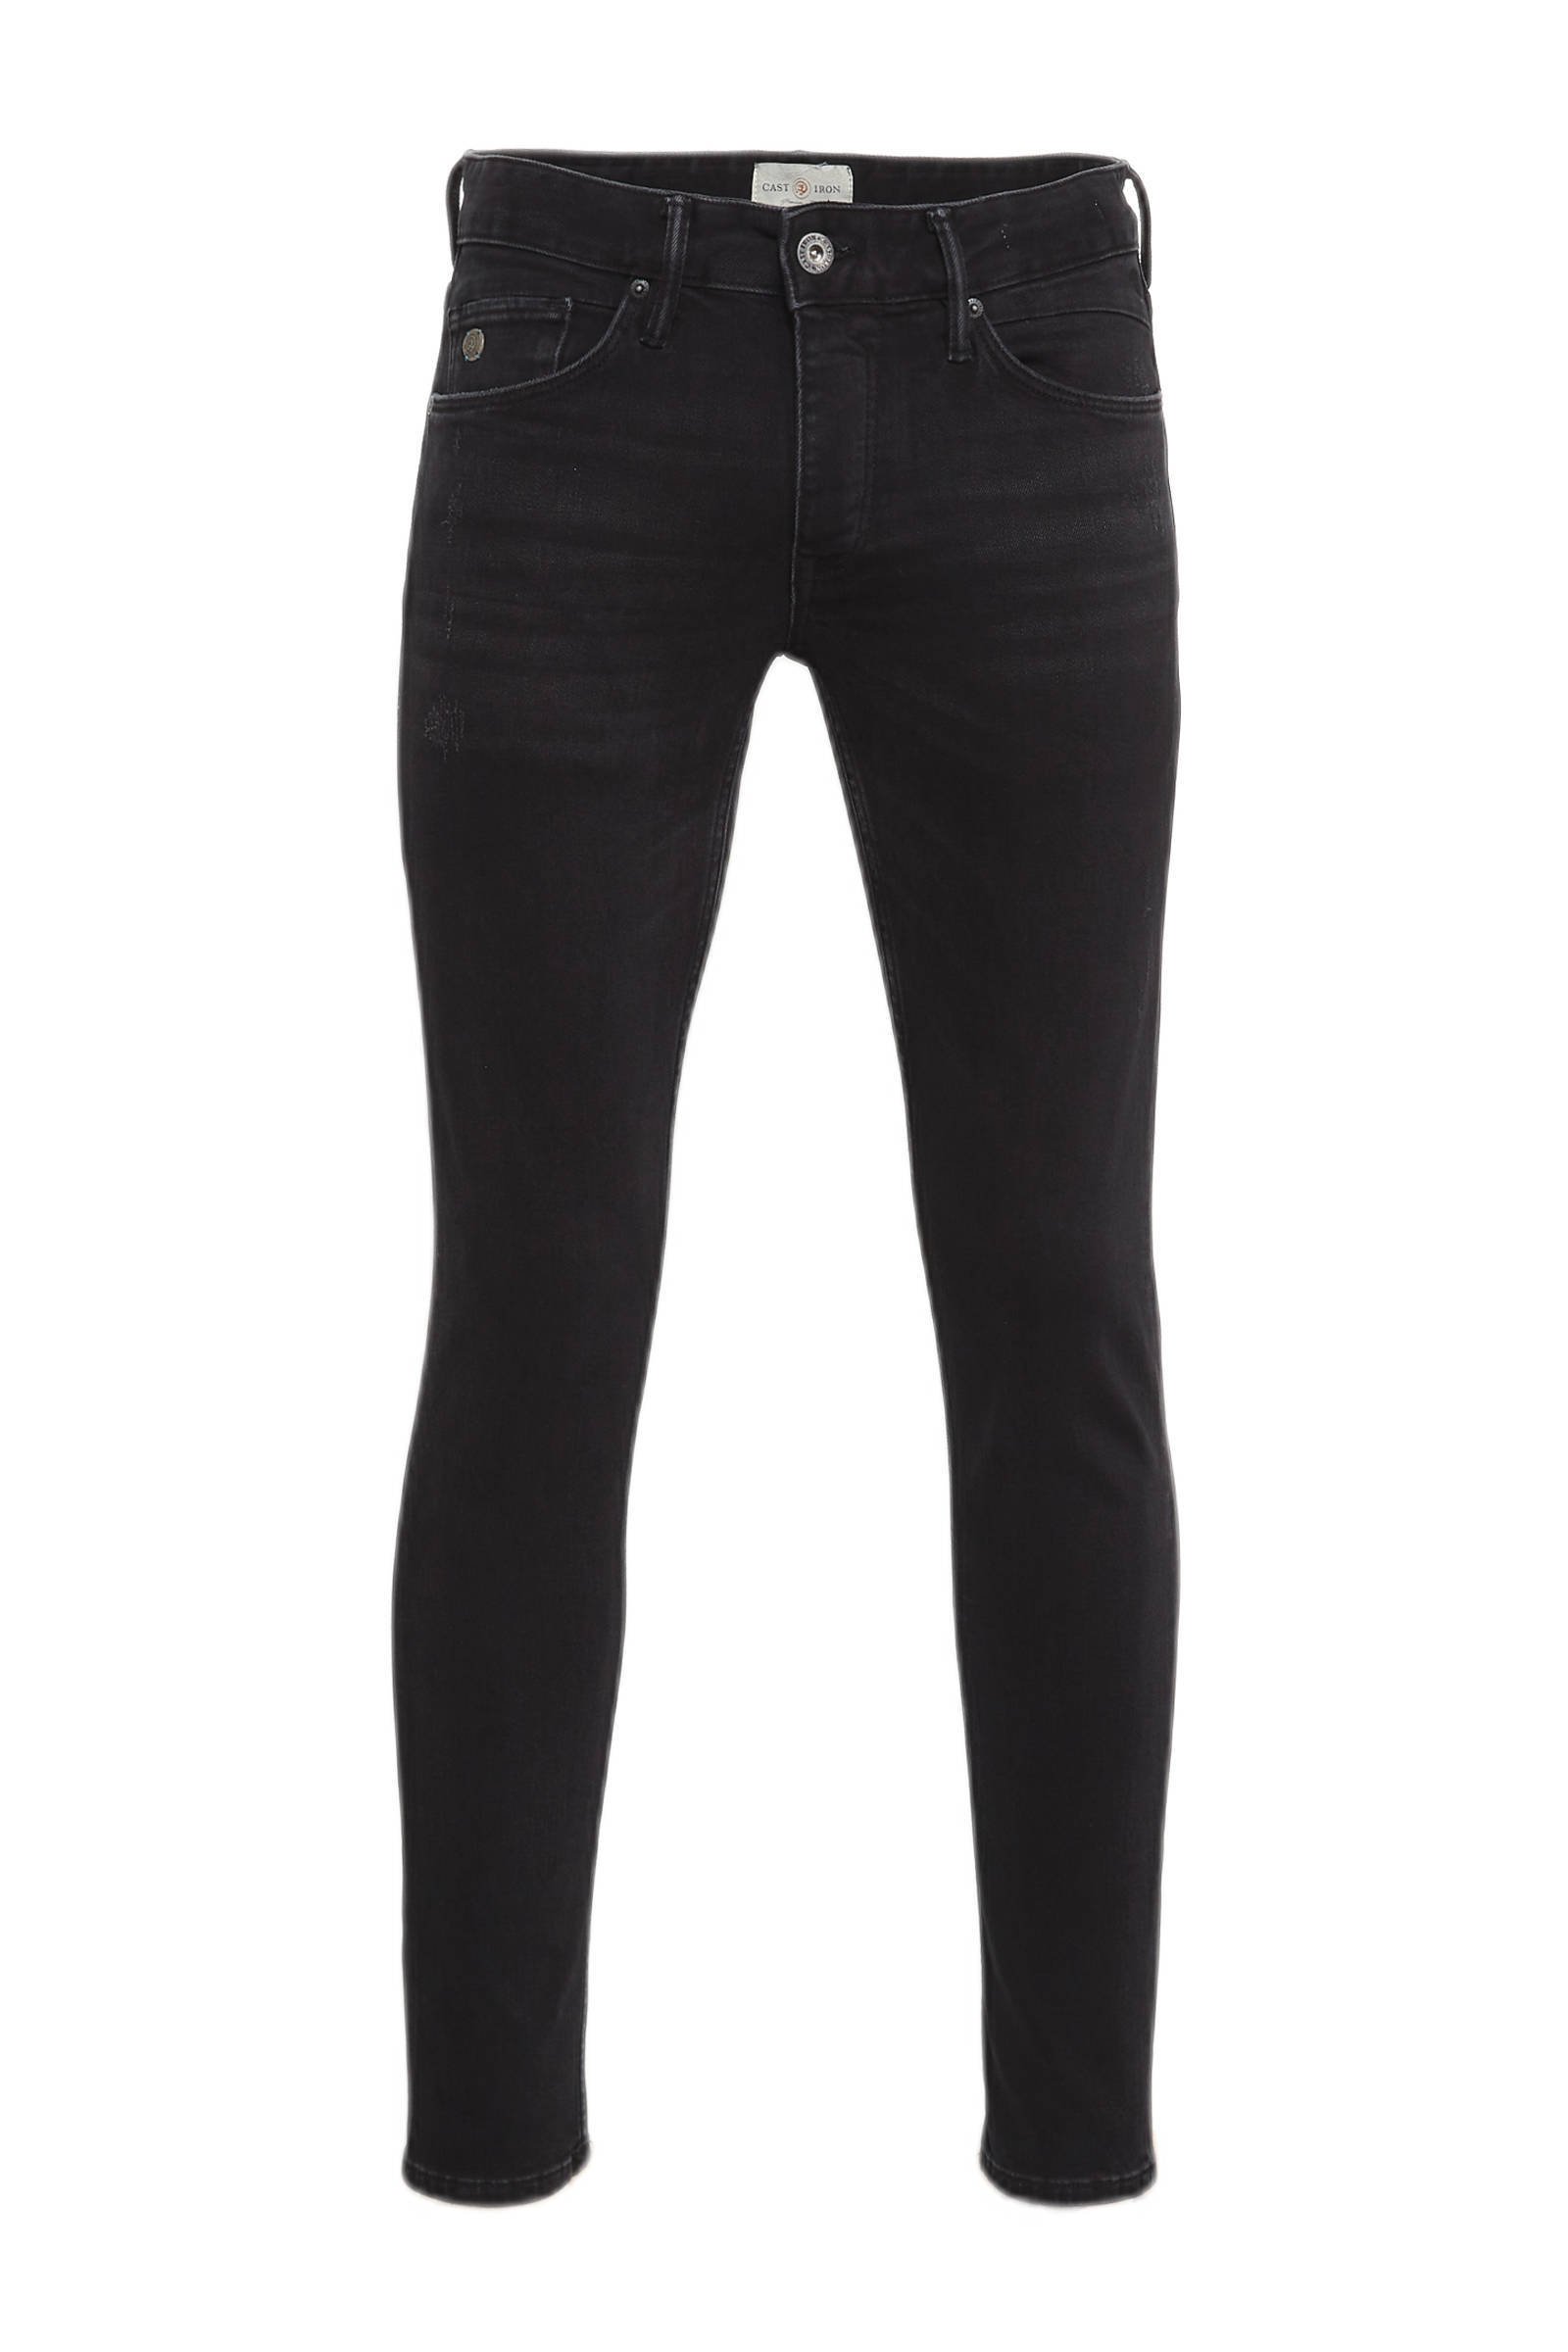 Cast Iron Zwarte Slim Fit Jeans Riser Slim Comfort Black Denim online kopen